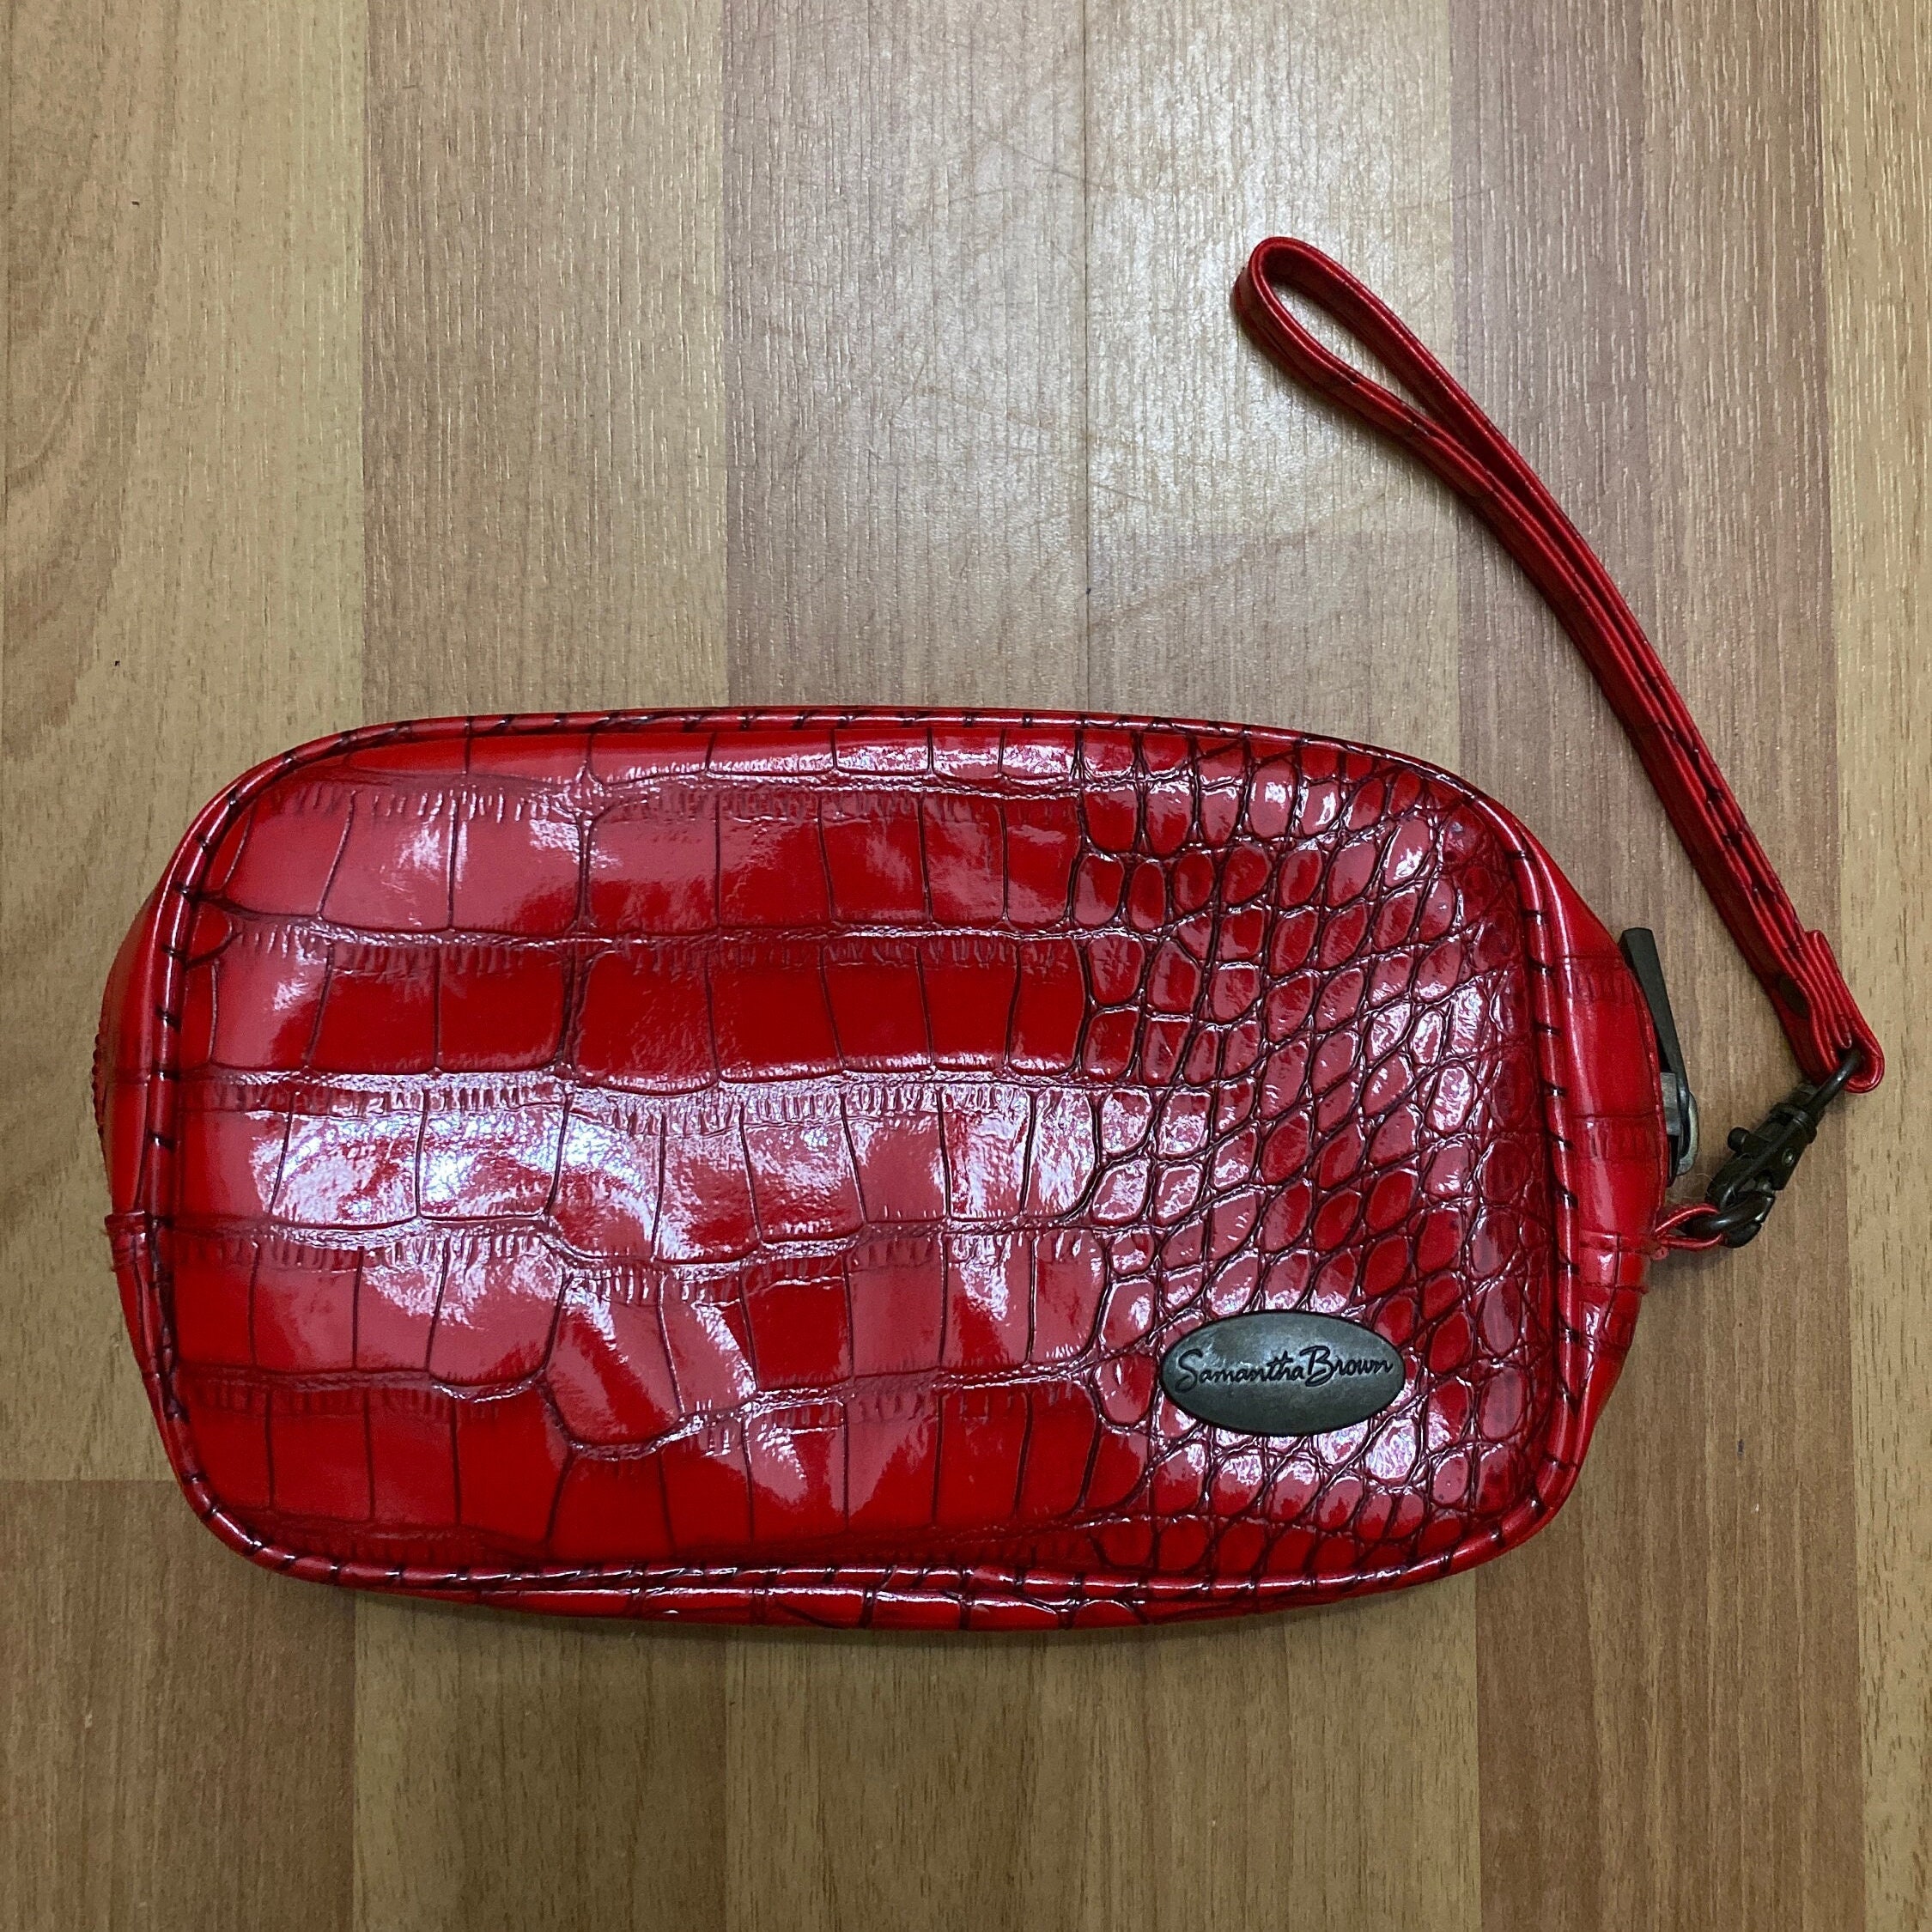 Samantha Brown Large Croc-Embossed Travel Laptop Bag Weekend Tote Purse W  Strap | eBay